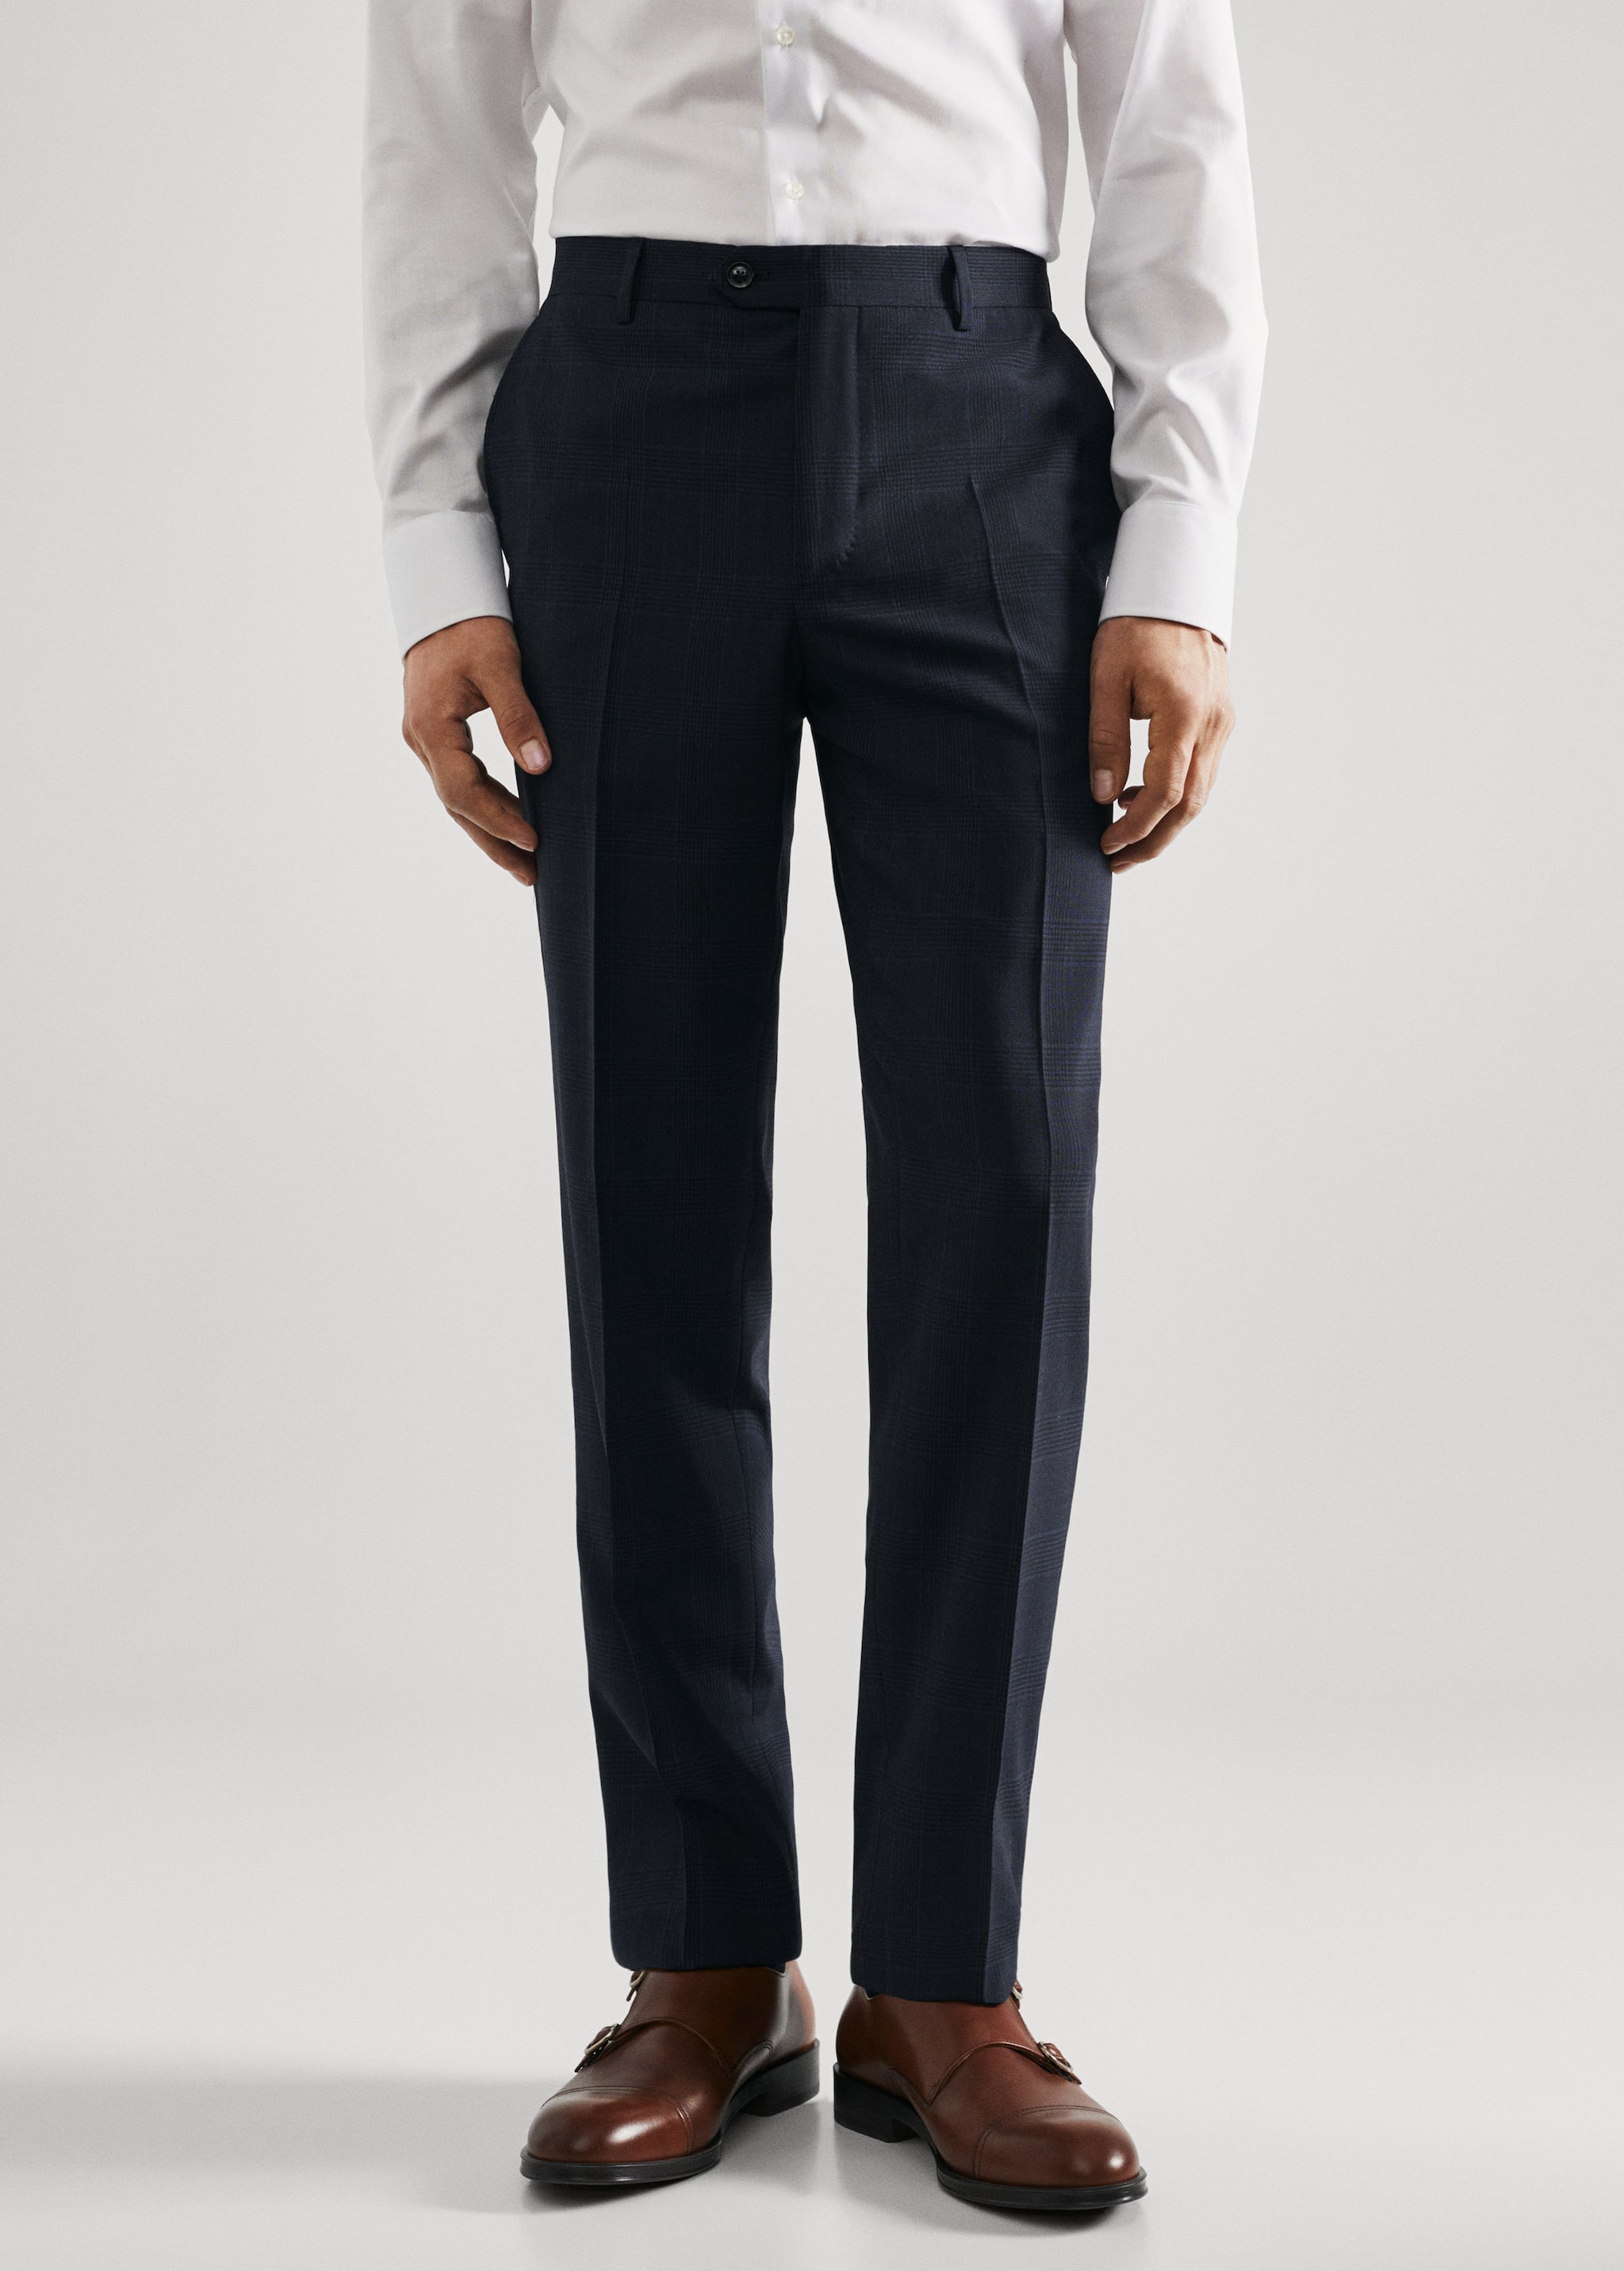 Pantalón traje slim fit lana virgen - Plano medio